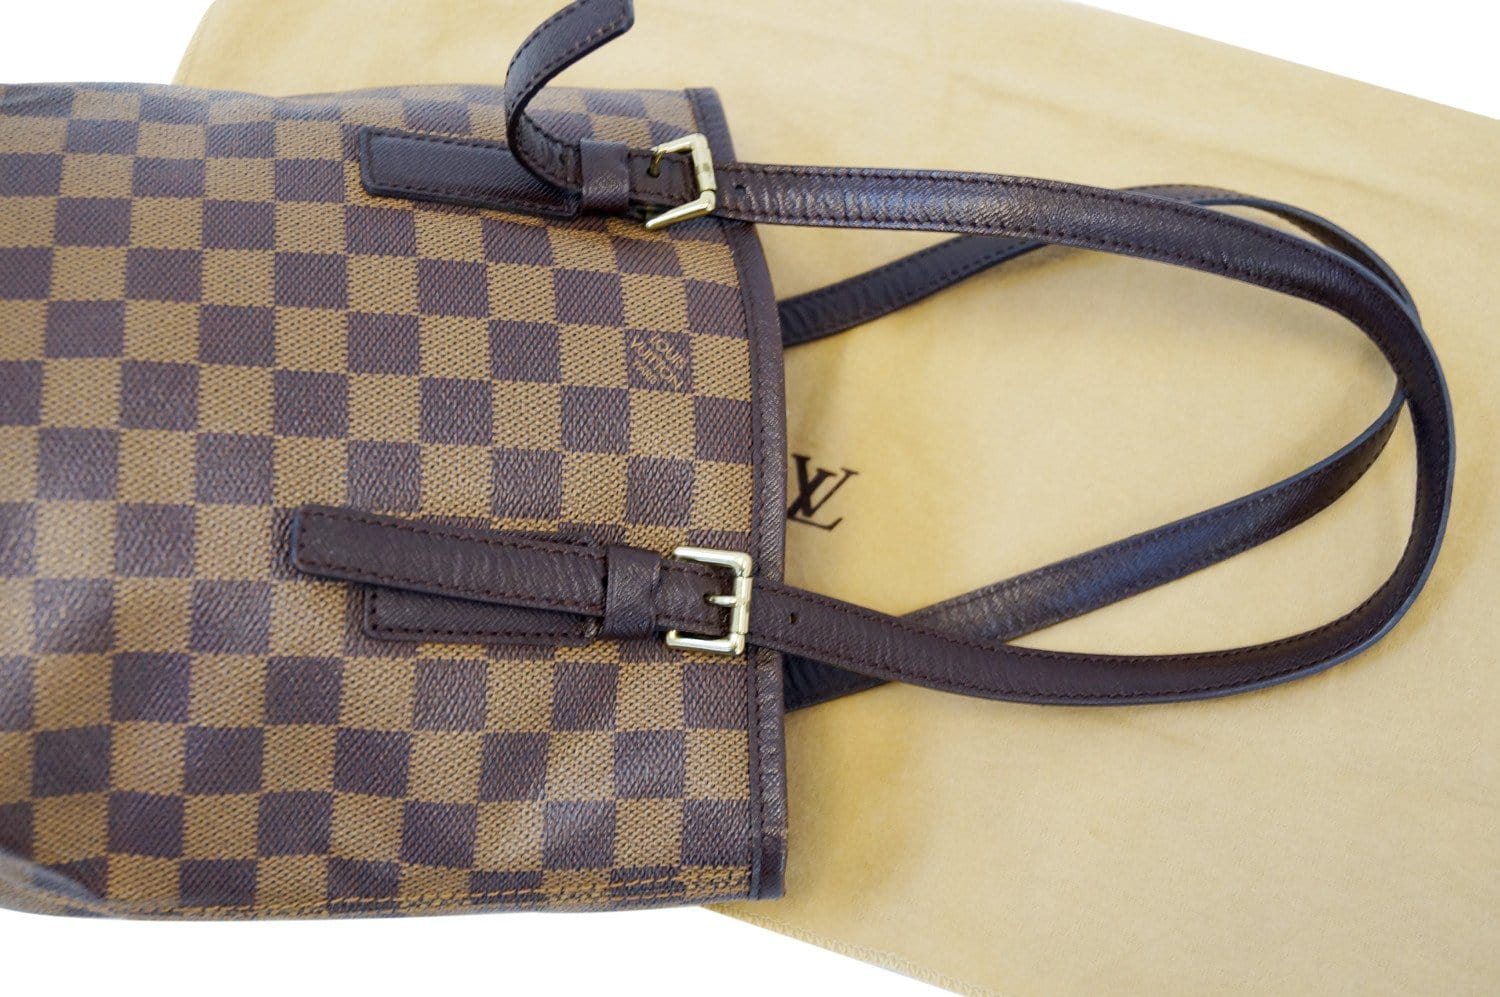 Marais leather handbag Louis Vuitton Brown in Leather - 34850449